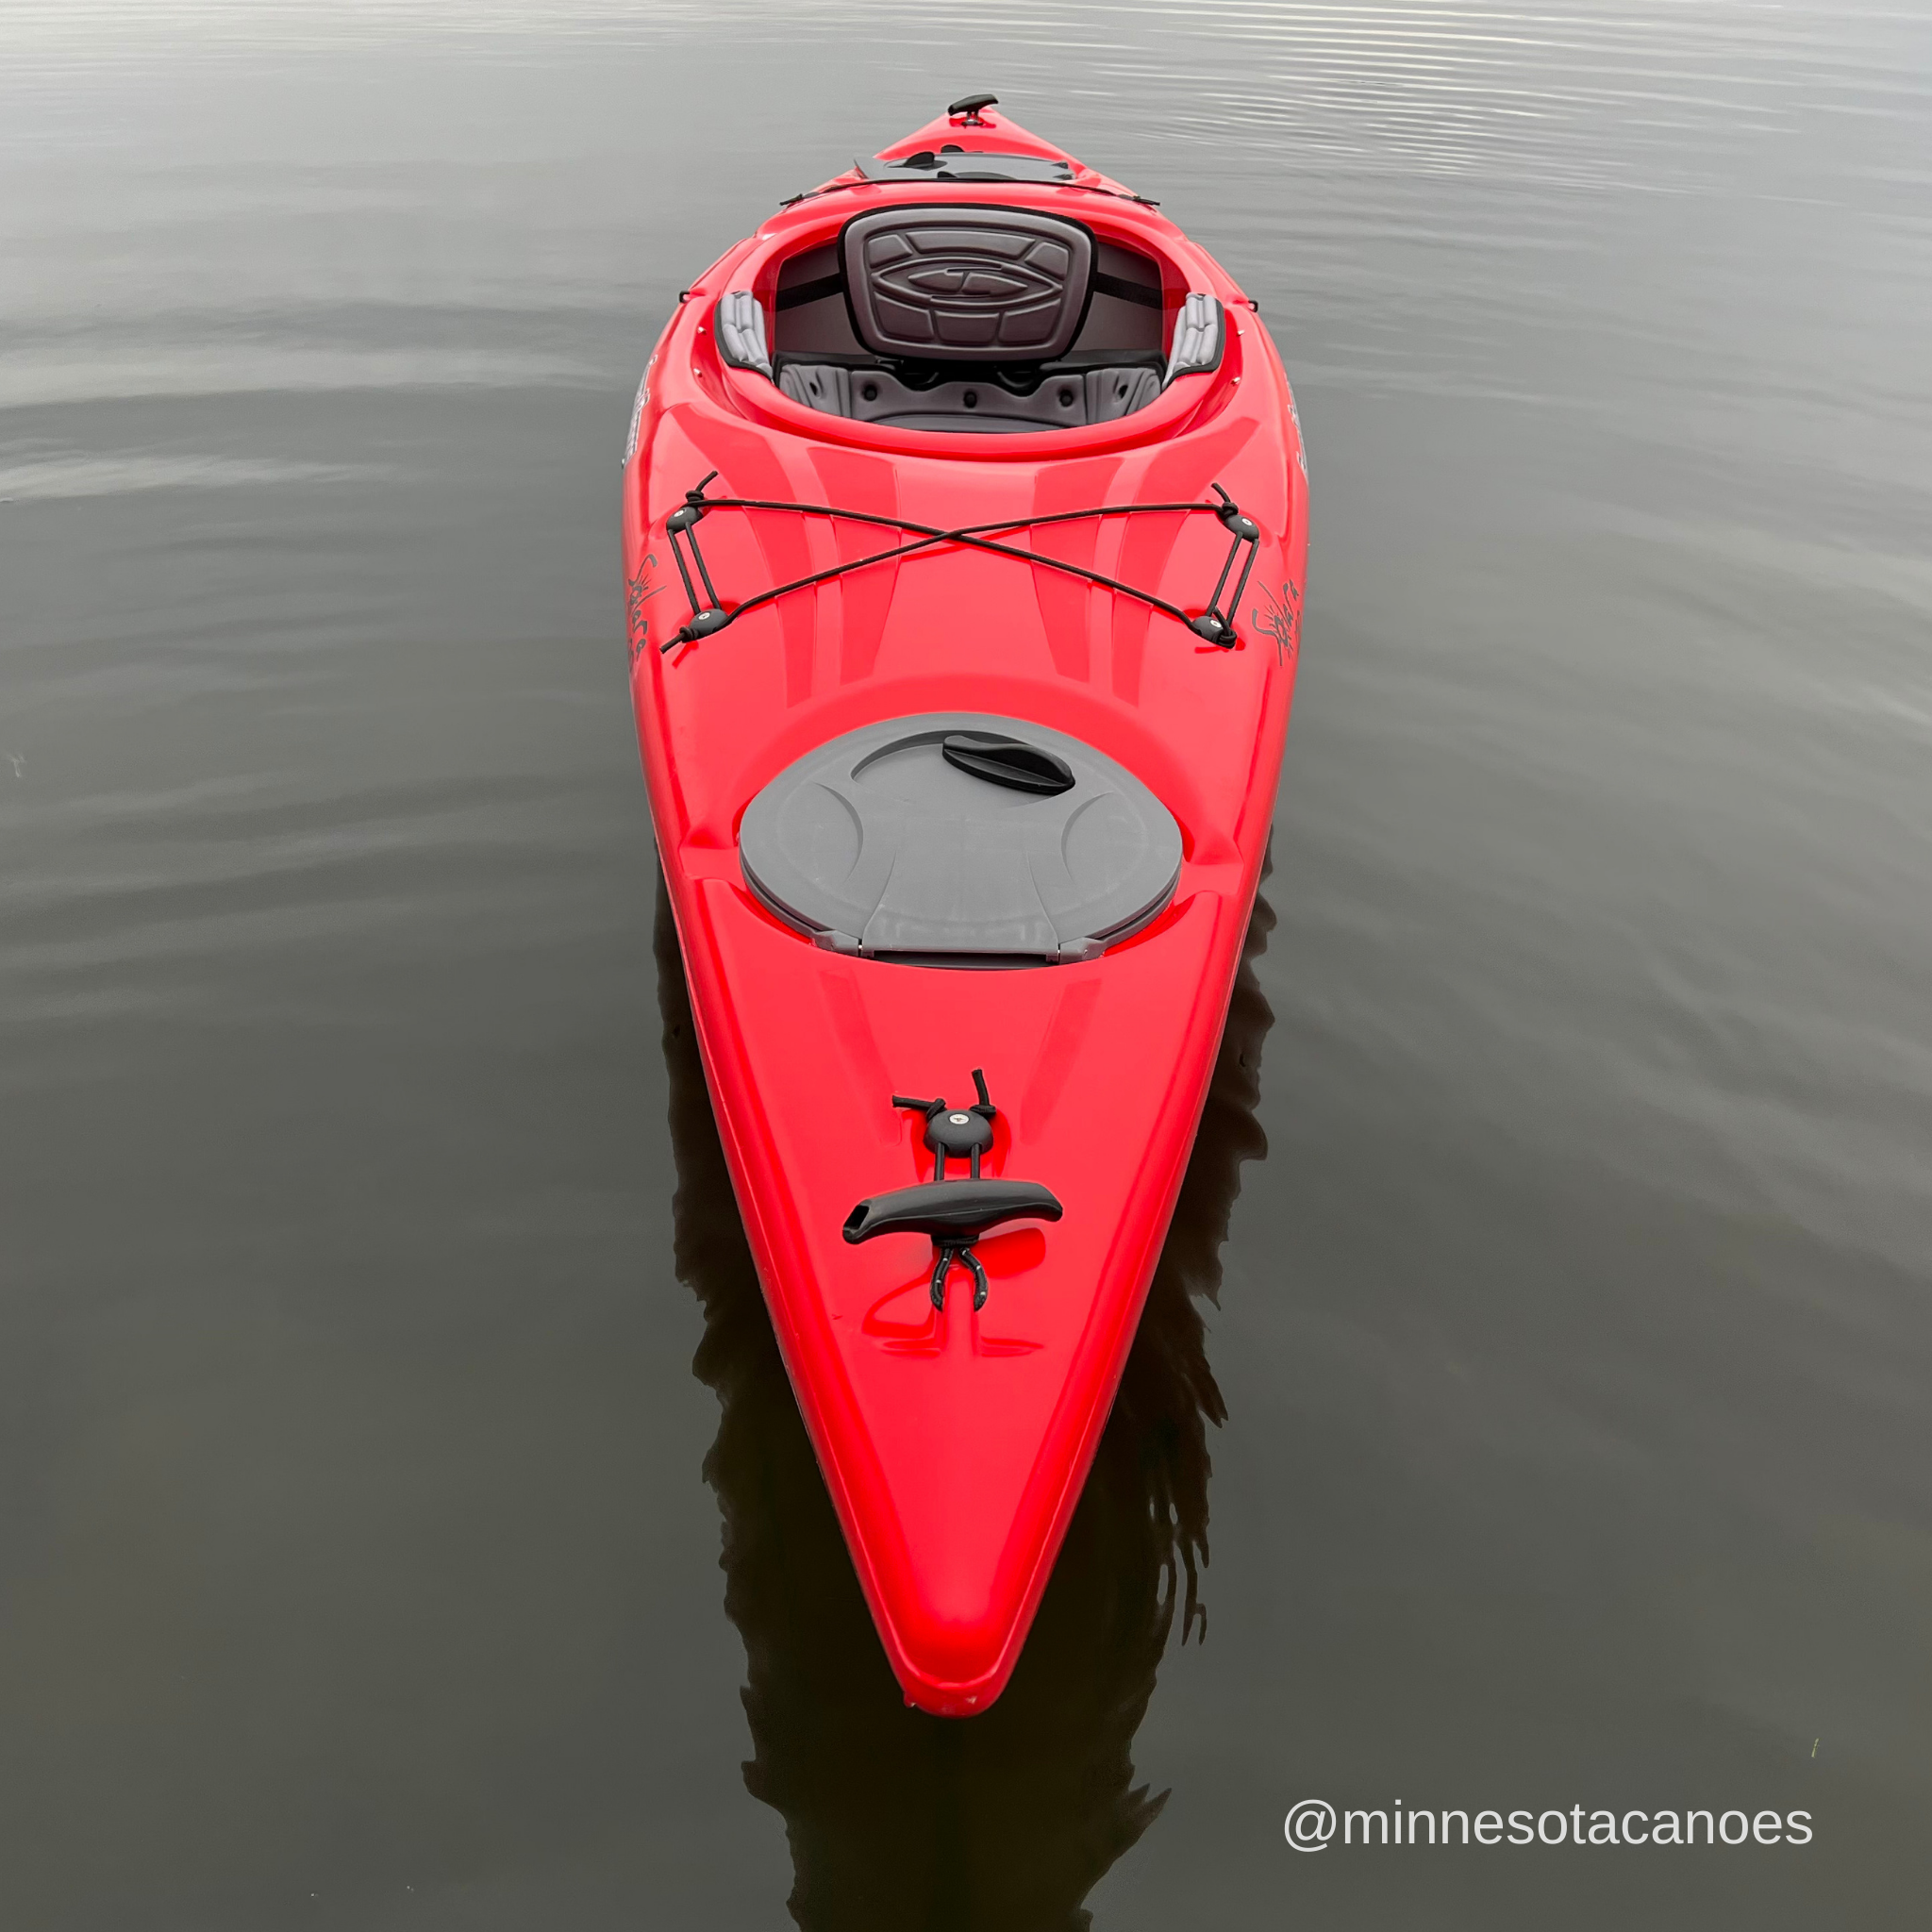 SOLARA 120 (12' 0") Red Color Current Designs Kayak